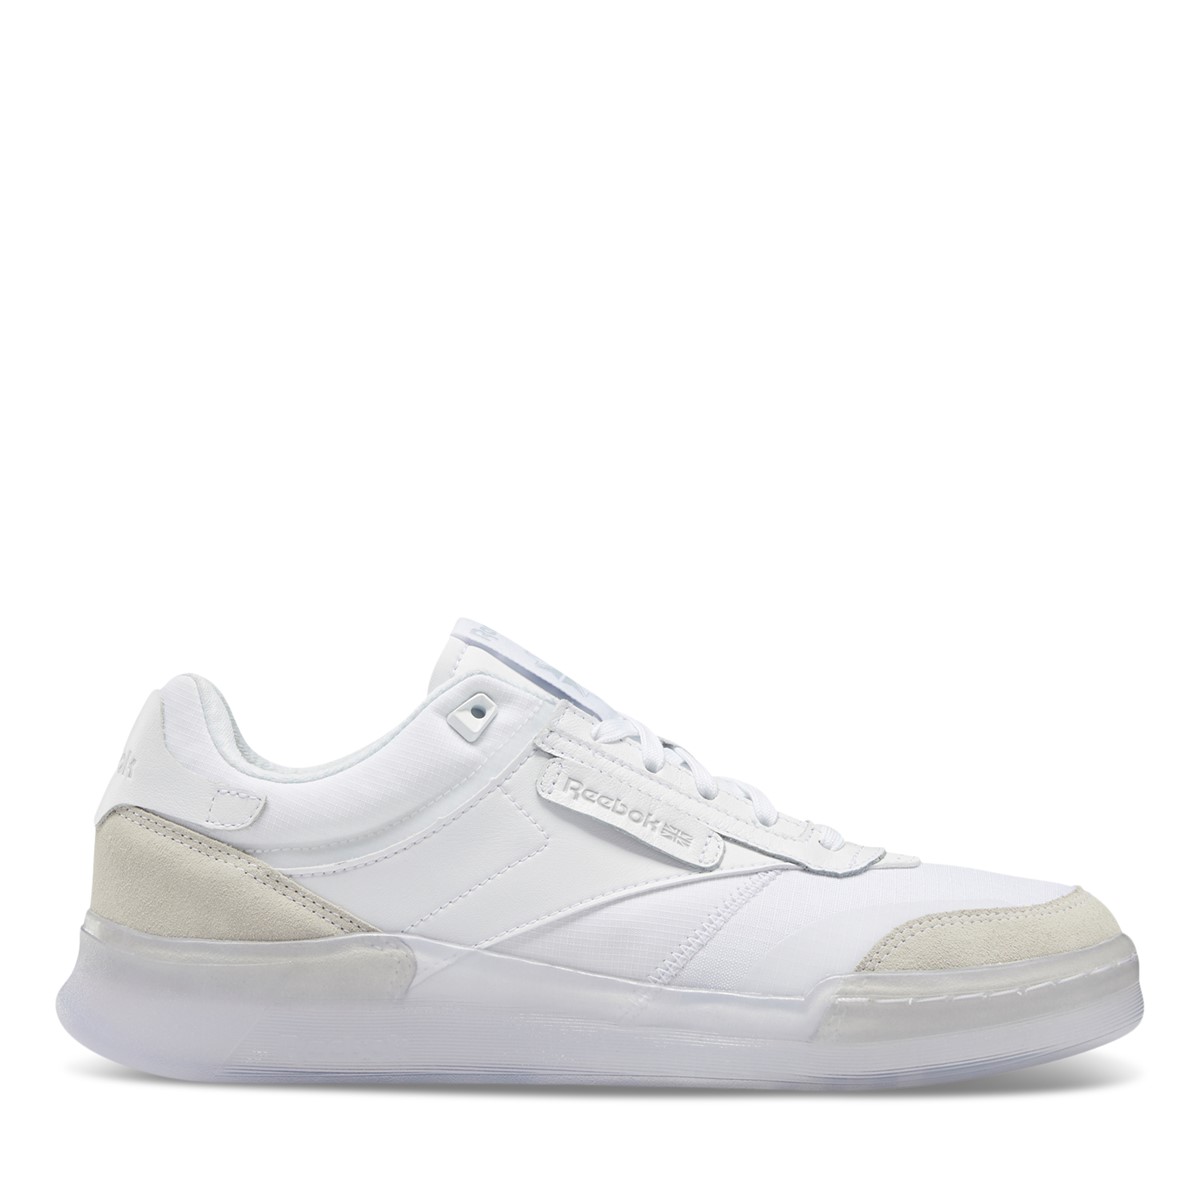 Men's Club C Legacy Sneakers in White/Light Grey